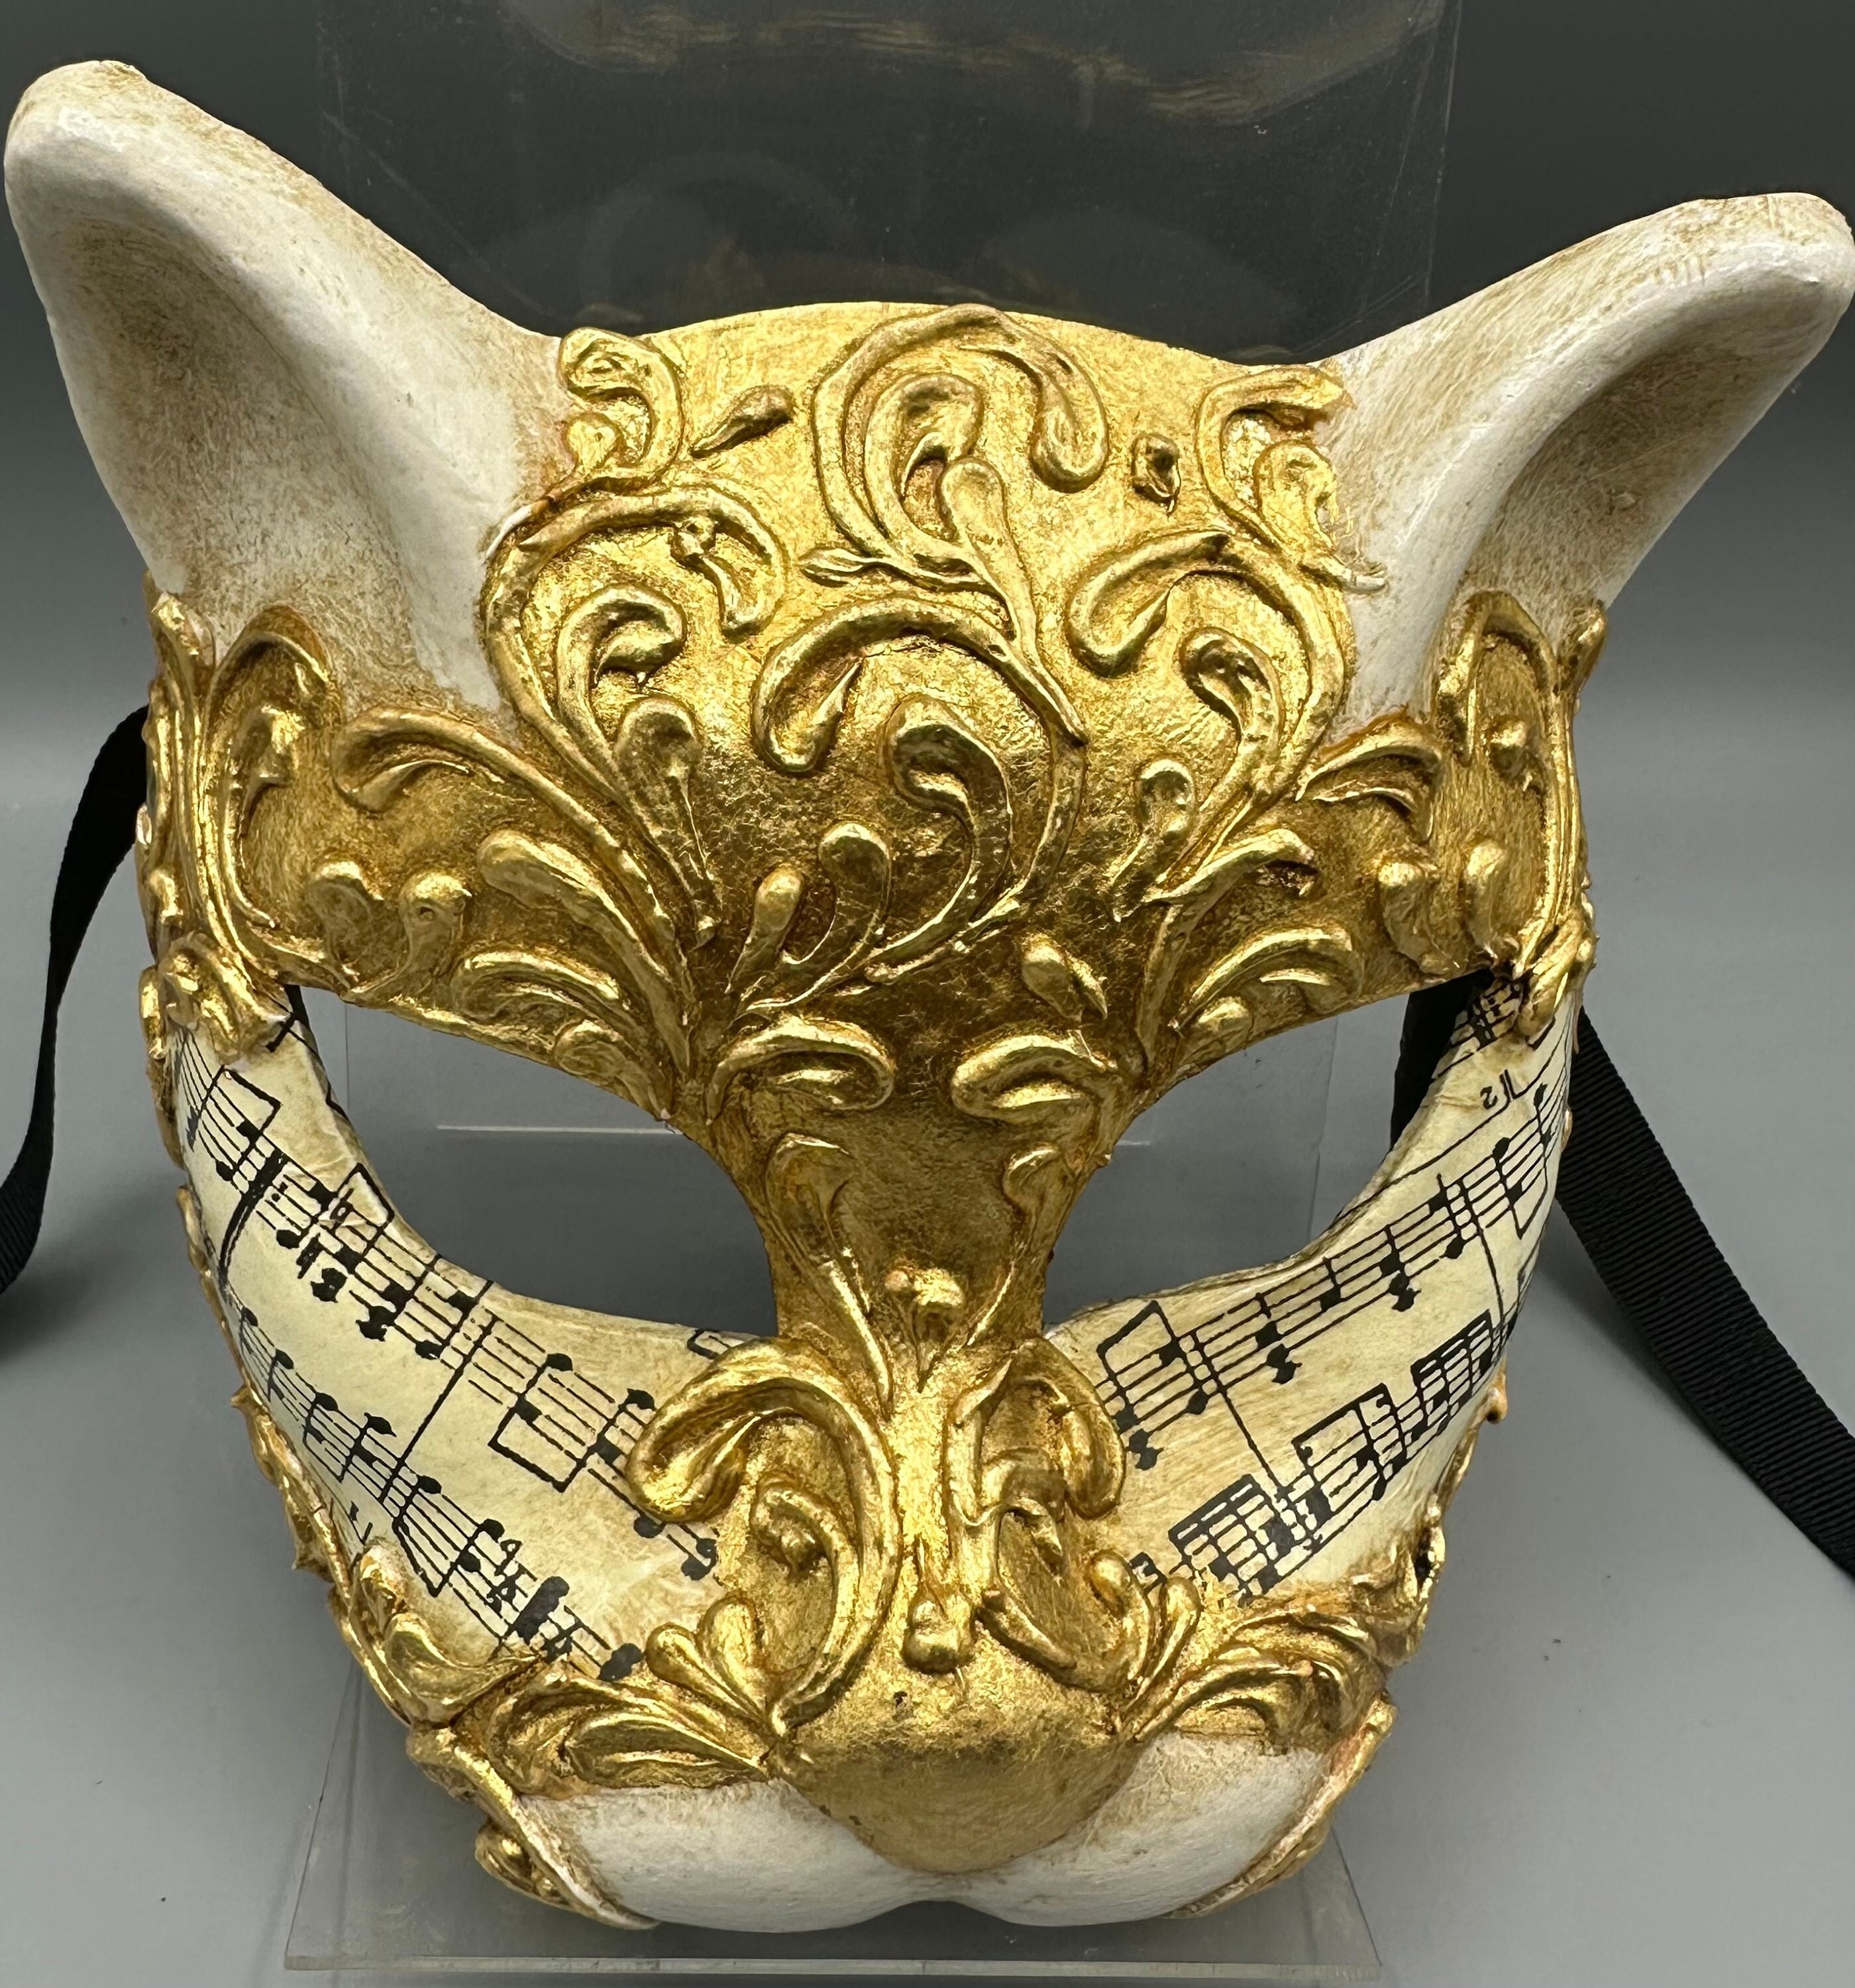 Custom Painted Cat Masks 